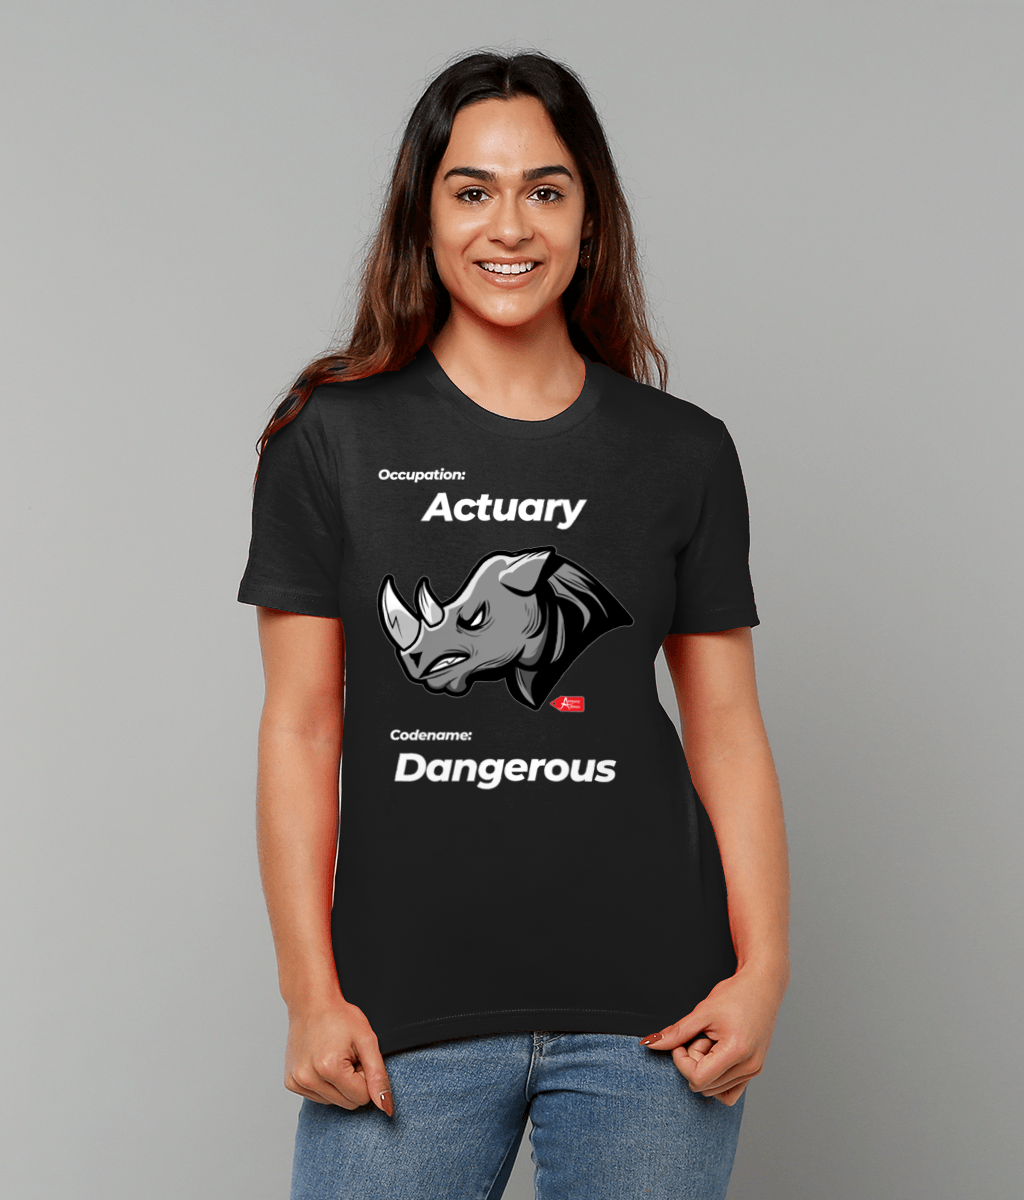 Occupation Actuary Codename Dangerous Rhino T-Shirt